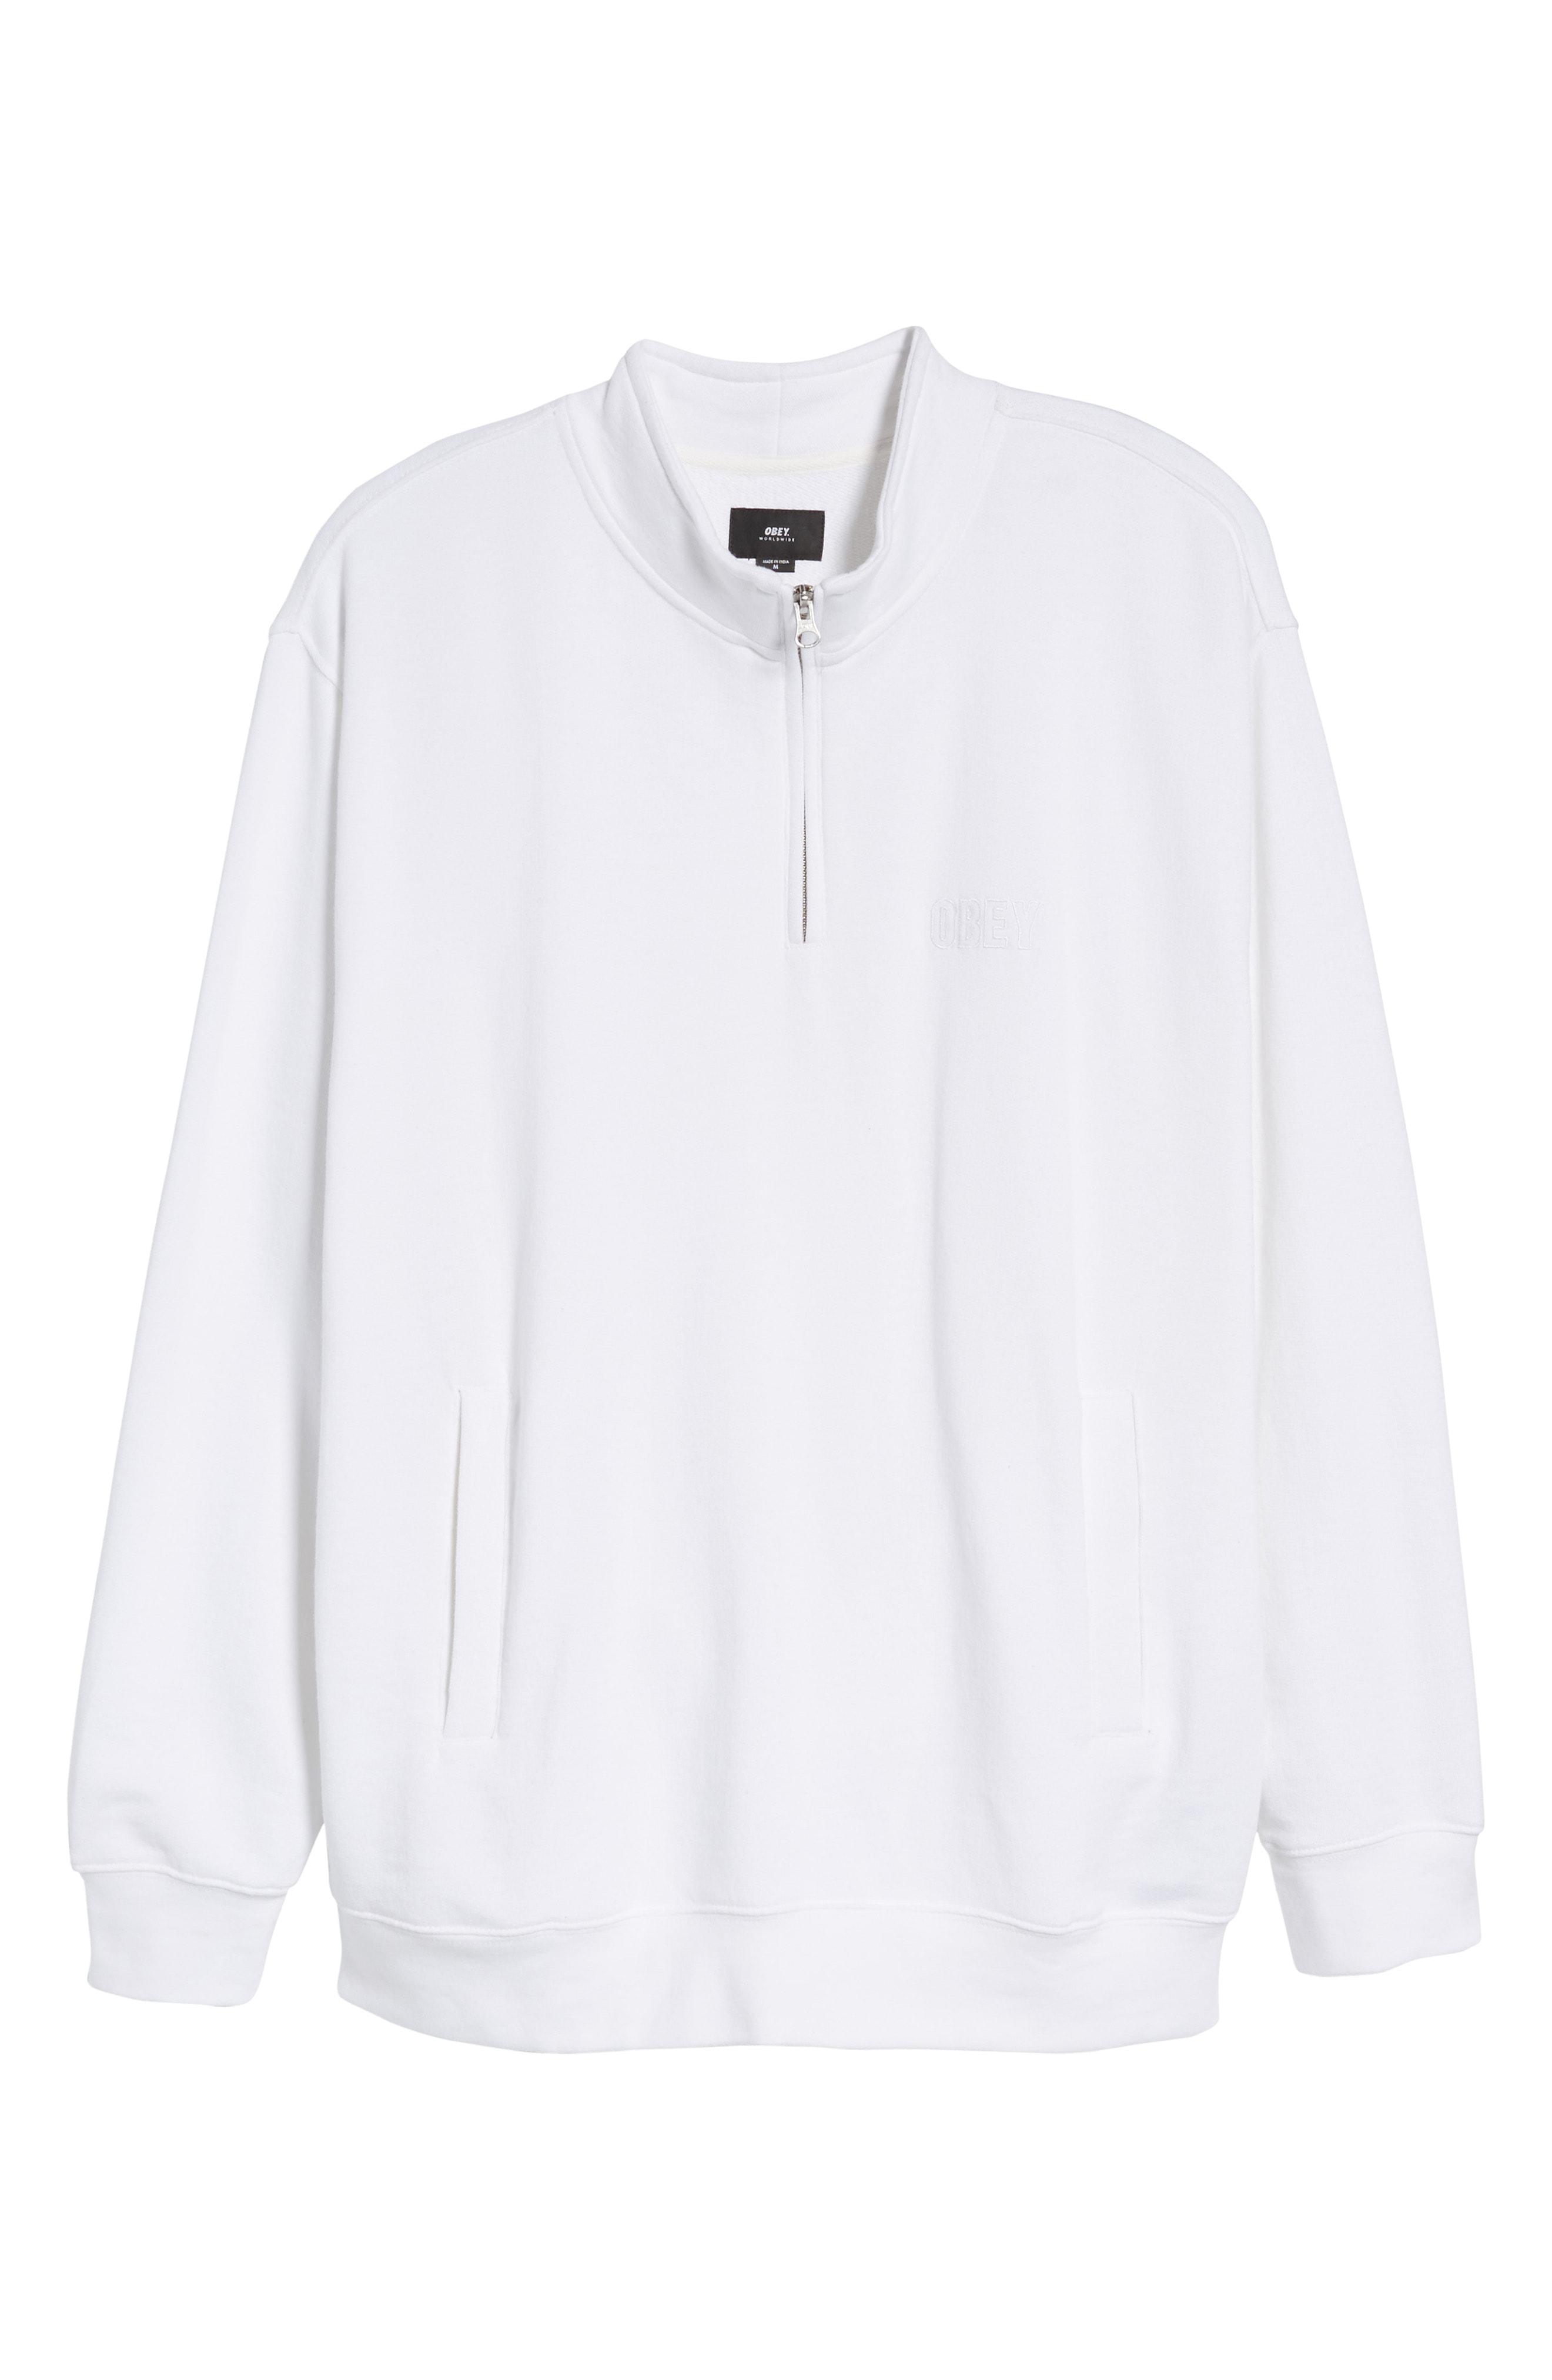 Obey Atomatic Quarter-zip Fleece Pullover In White | ModeSens